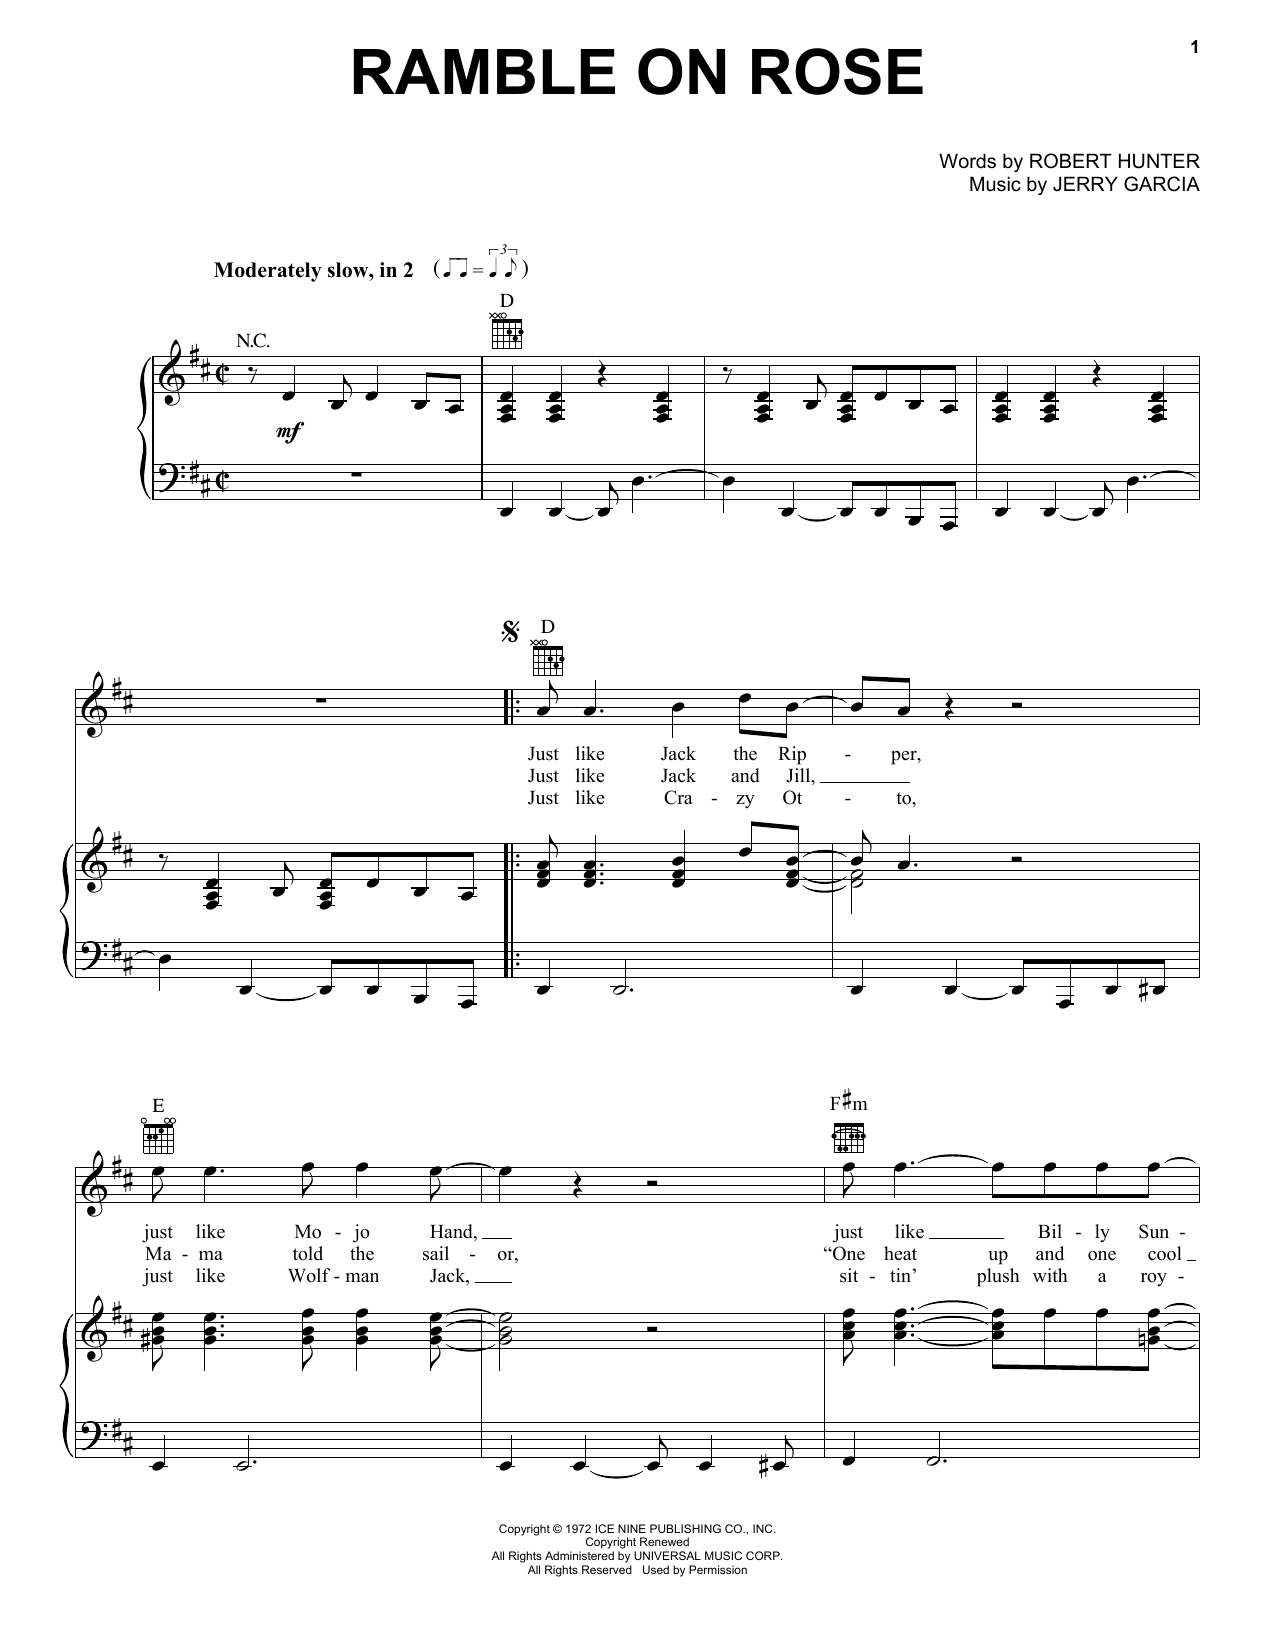 Grateful Dead Ramble On Rose Sheet Music Notes & Chords for Ukulele - Download or Print PDF